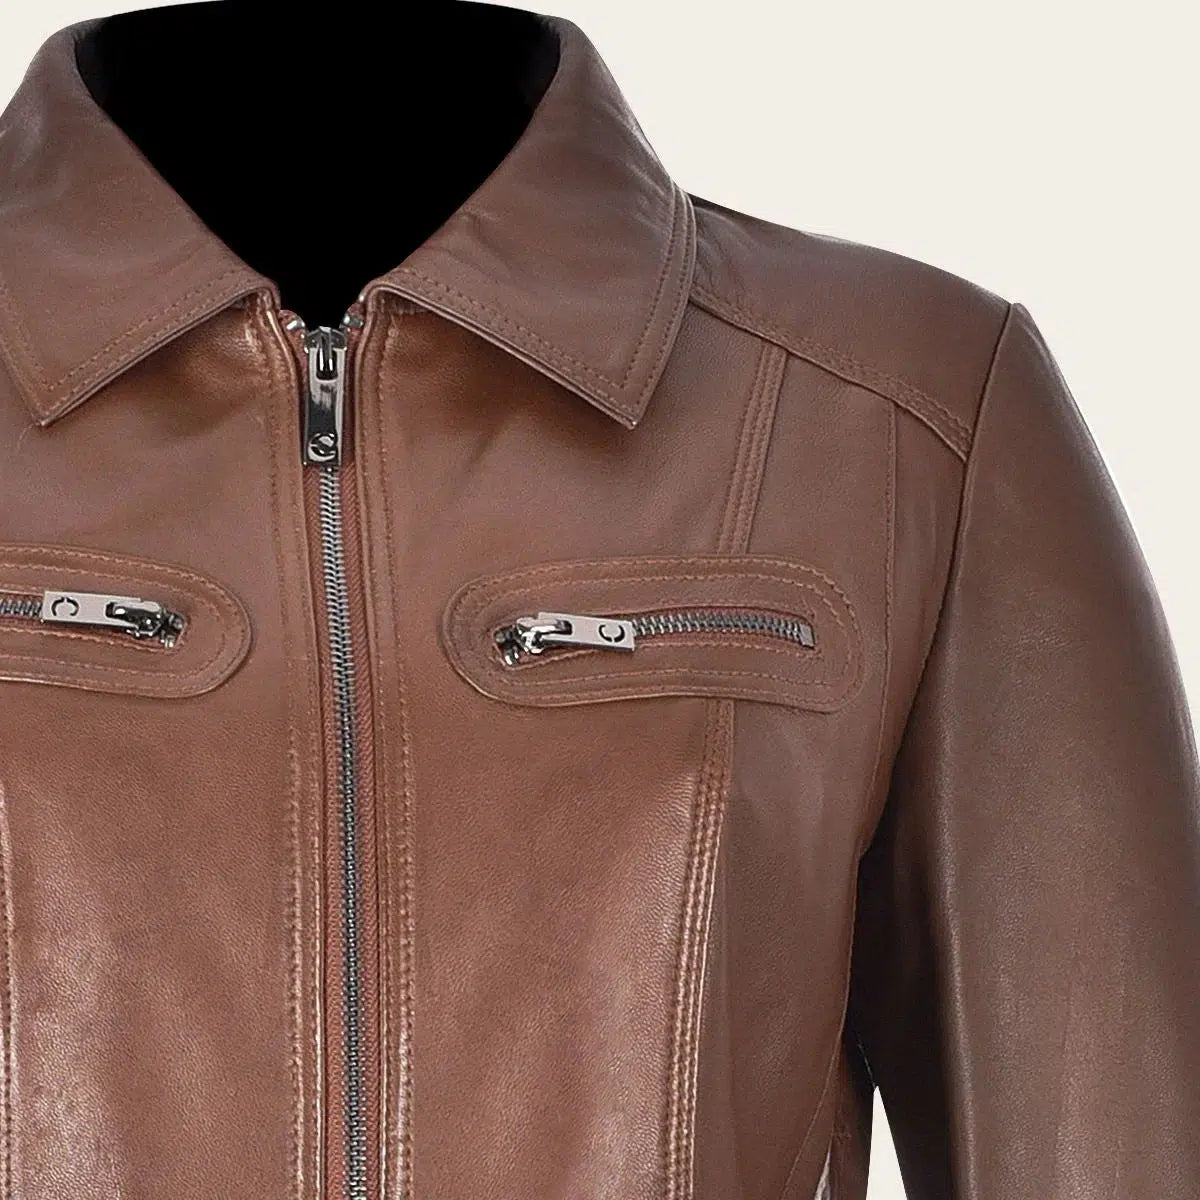 MCMP004 - Cuadra brown dress casual fashion sheepskin leather jacket for women-Kuet.us